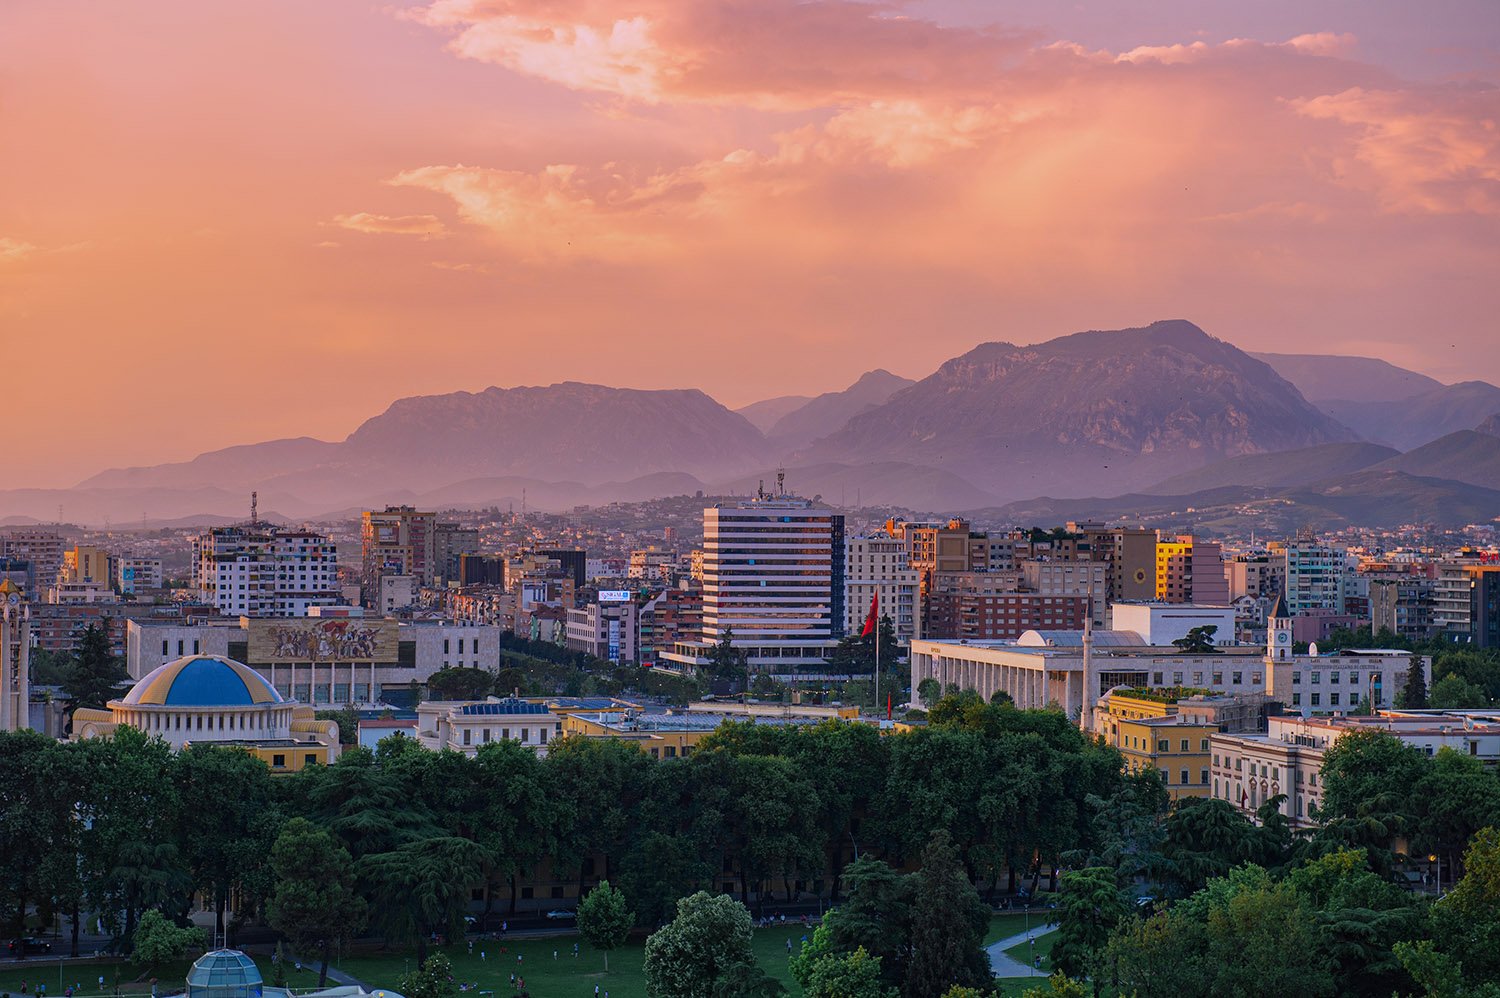 Tirana at Sunset © Alla Simacheva / Shutterstock.com